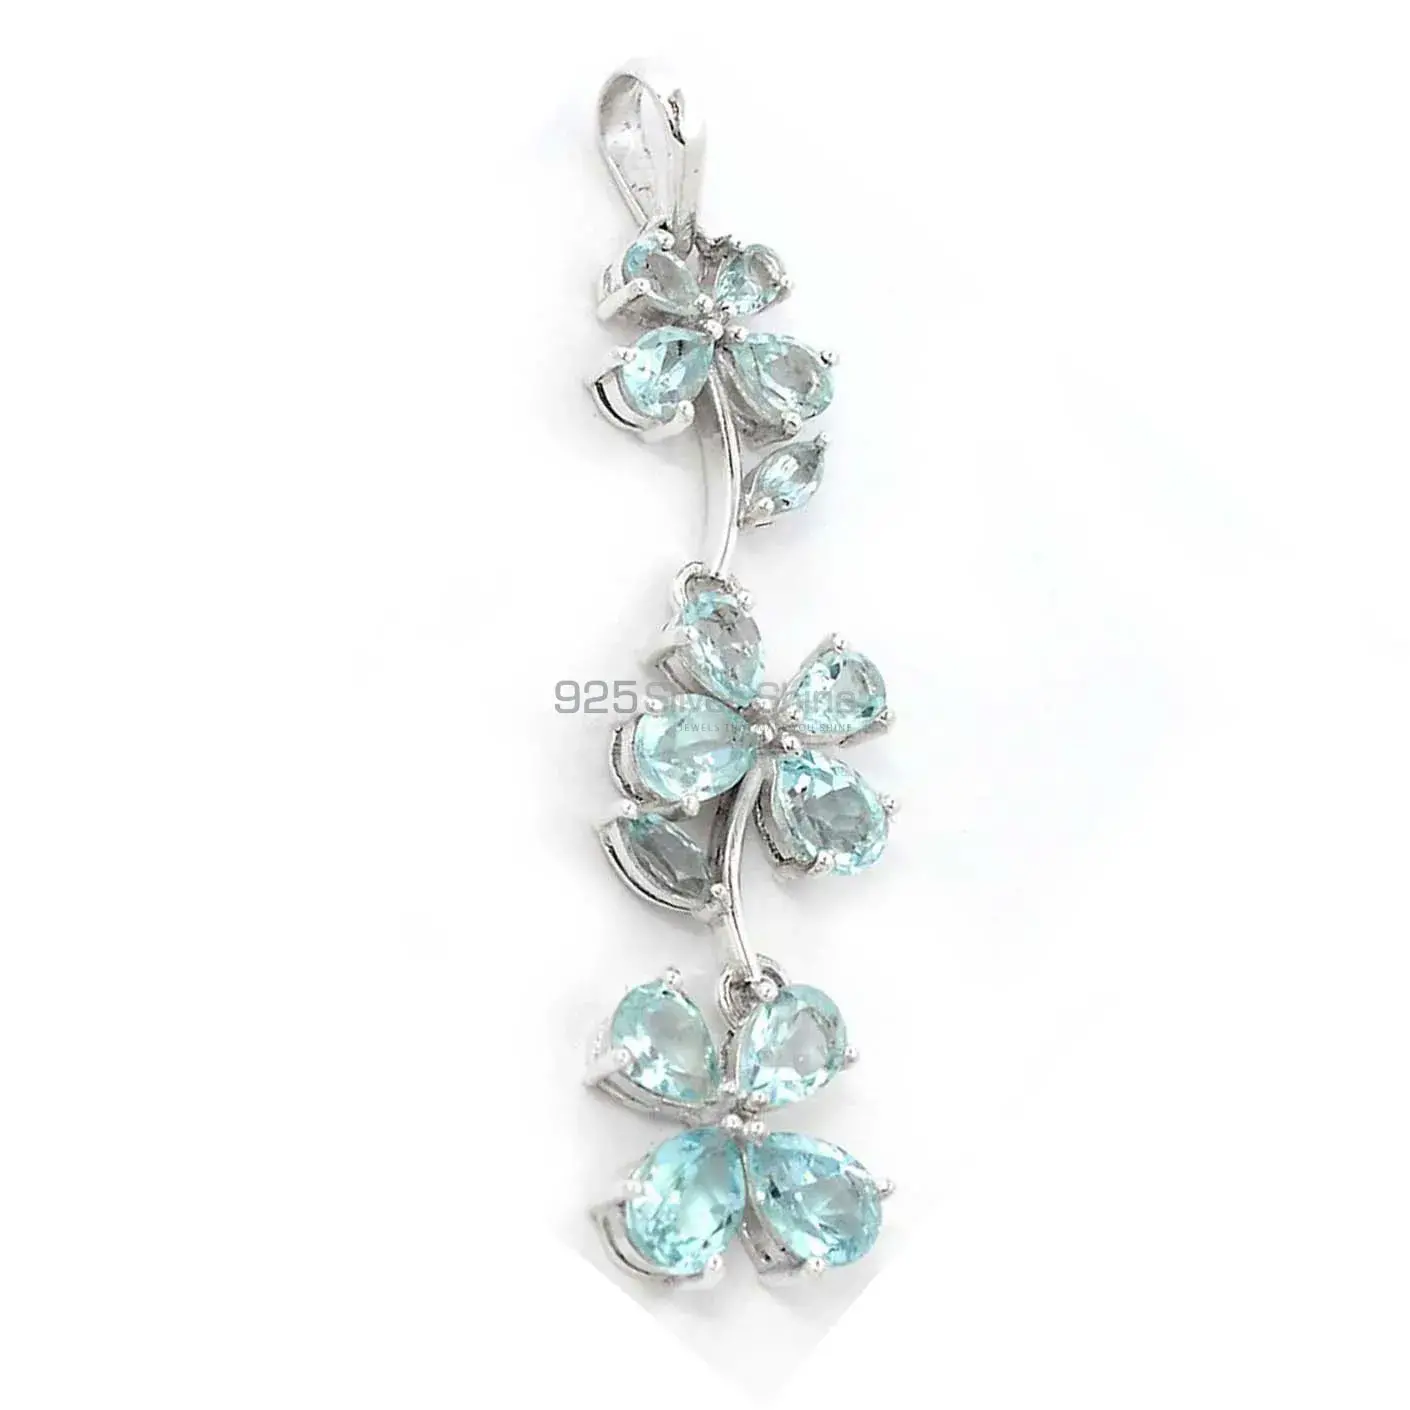 Blue Topaz Gemstone Handmade Pendants In 925 Sterling Silver Jewelry 925SSP329-1_1